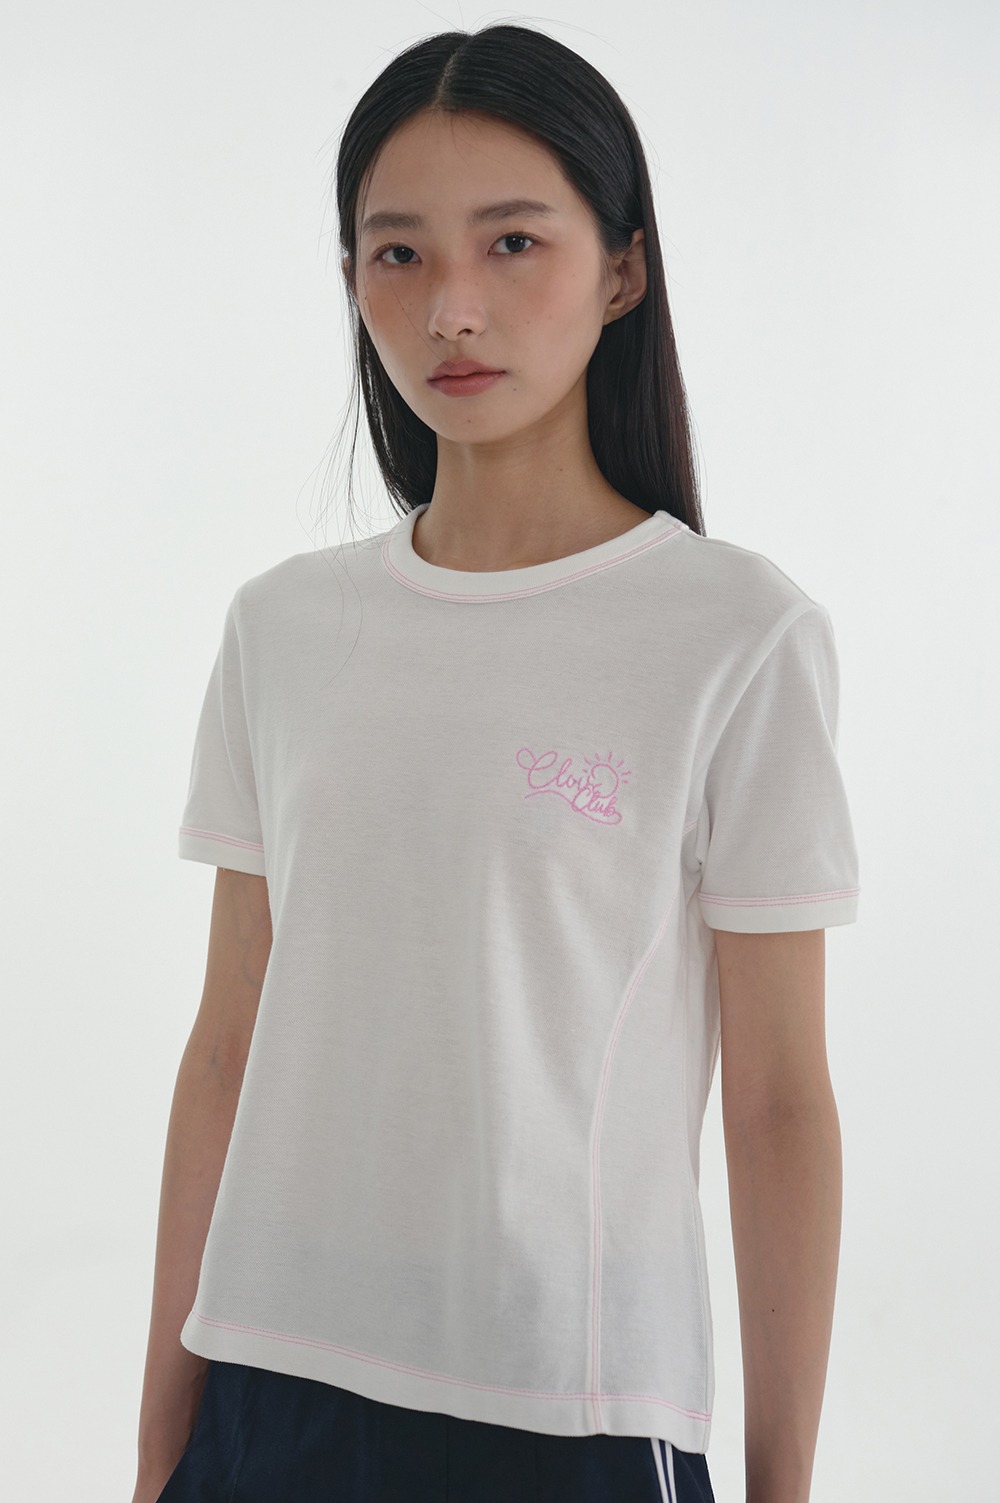 clove - [24SS clove] Stitch Point T-Shirt (White)